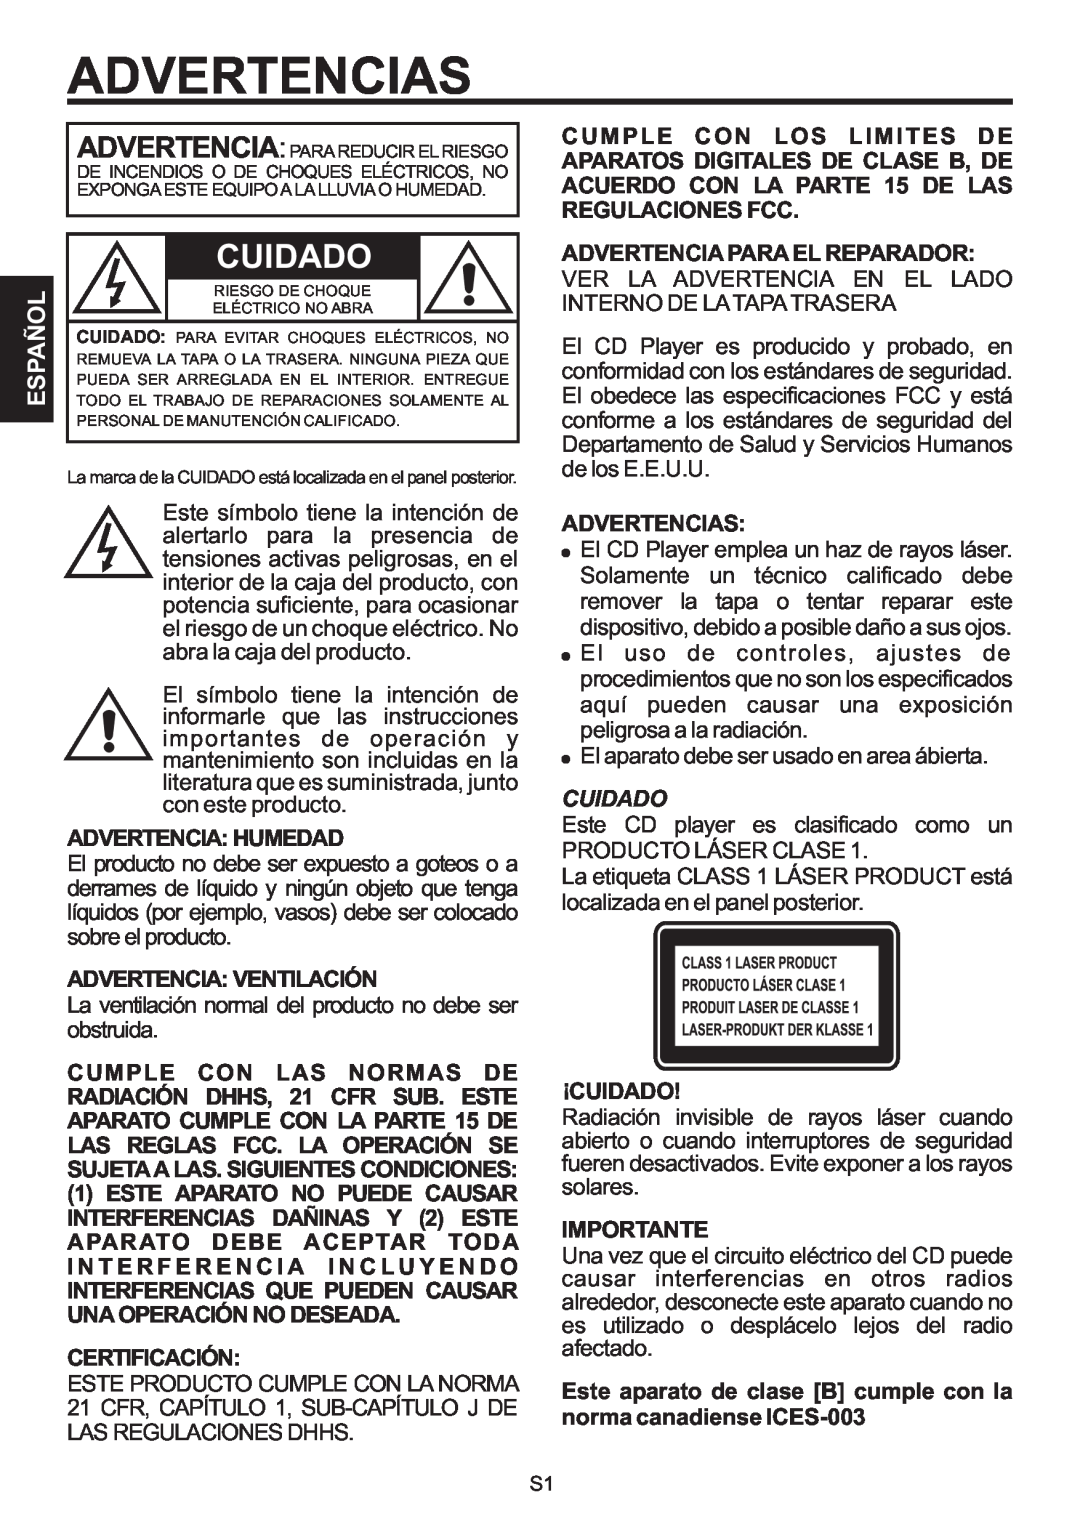 The Singing Machine SMB-664 Advertencias, Español, C U M P L E C O N L O S L I M I T E S D E, Regulaciones Fcc, Cuidado 